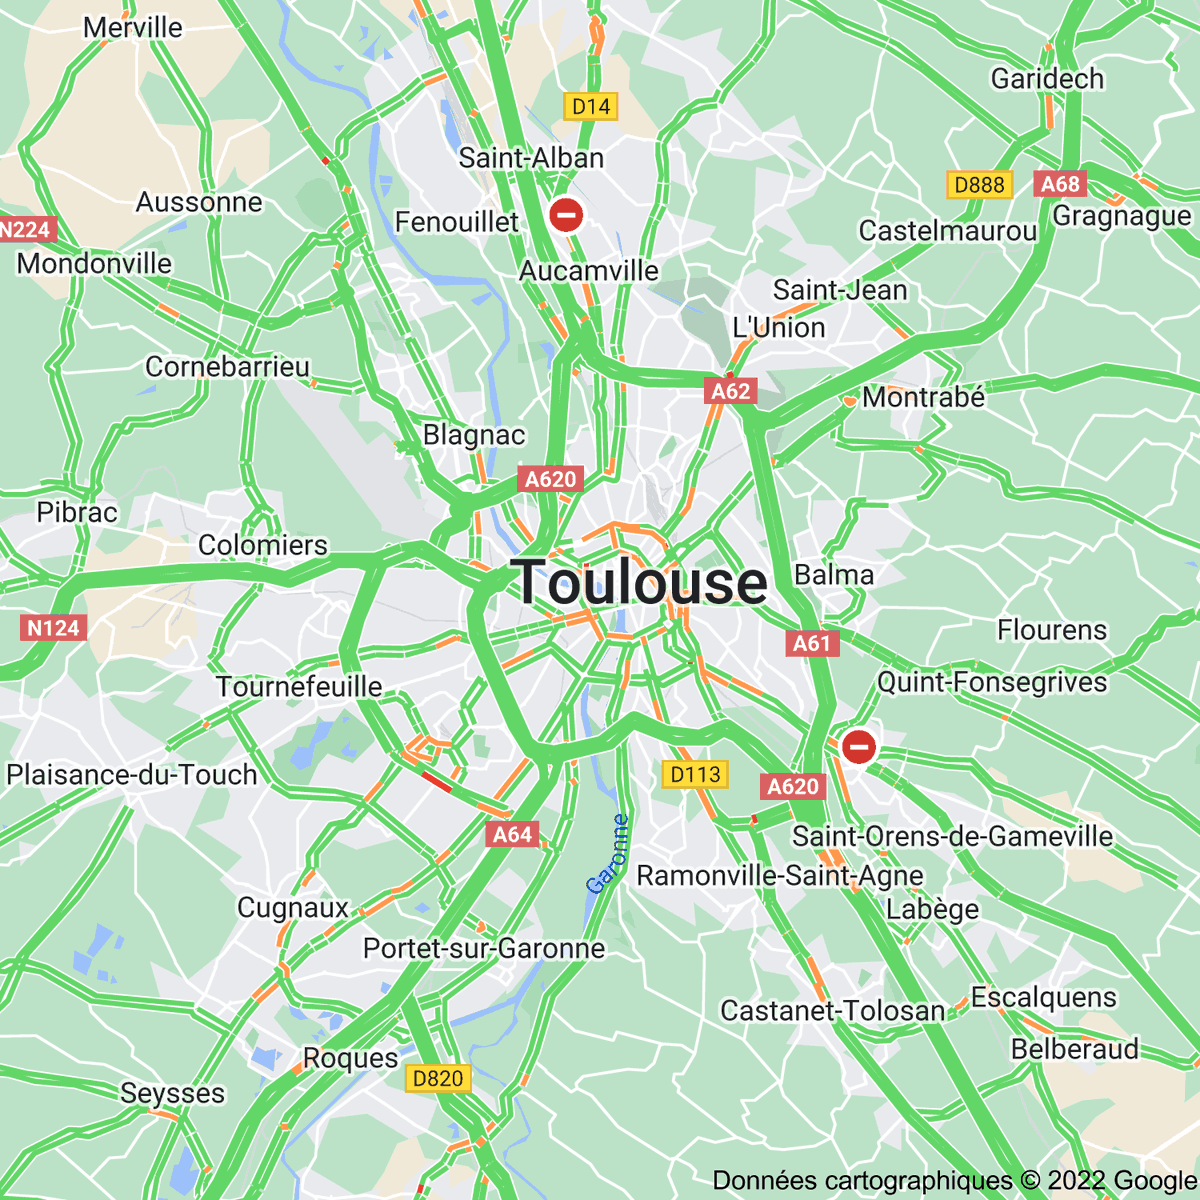 [FLASH 09:00] Trafic à Toulouse toulousetrafic.com #Toulouse #ToulousePeriph #InfoTrafic